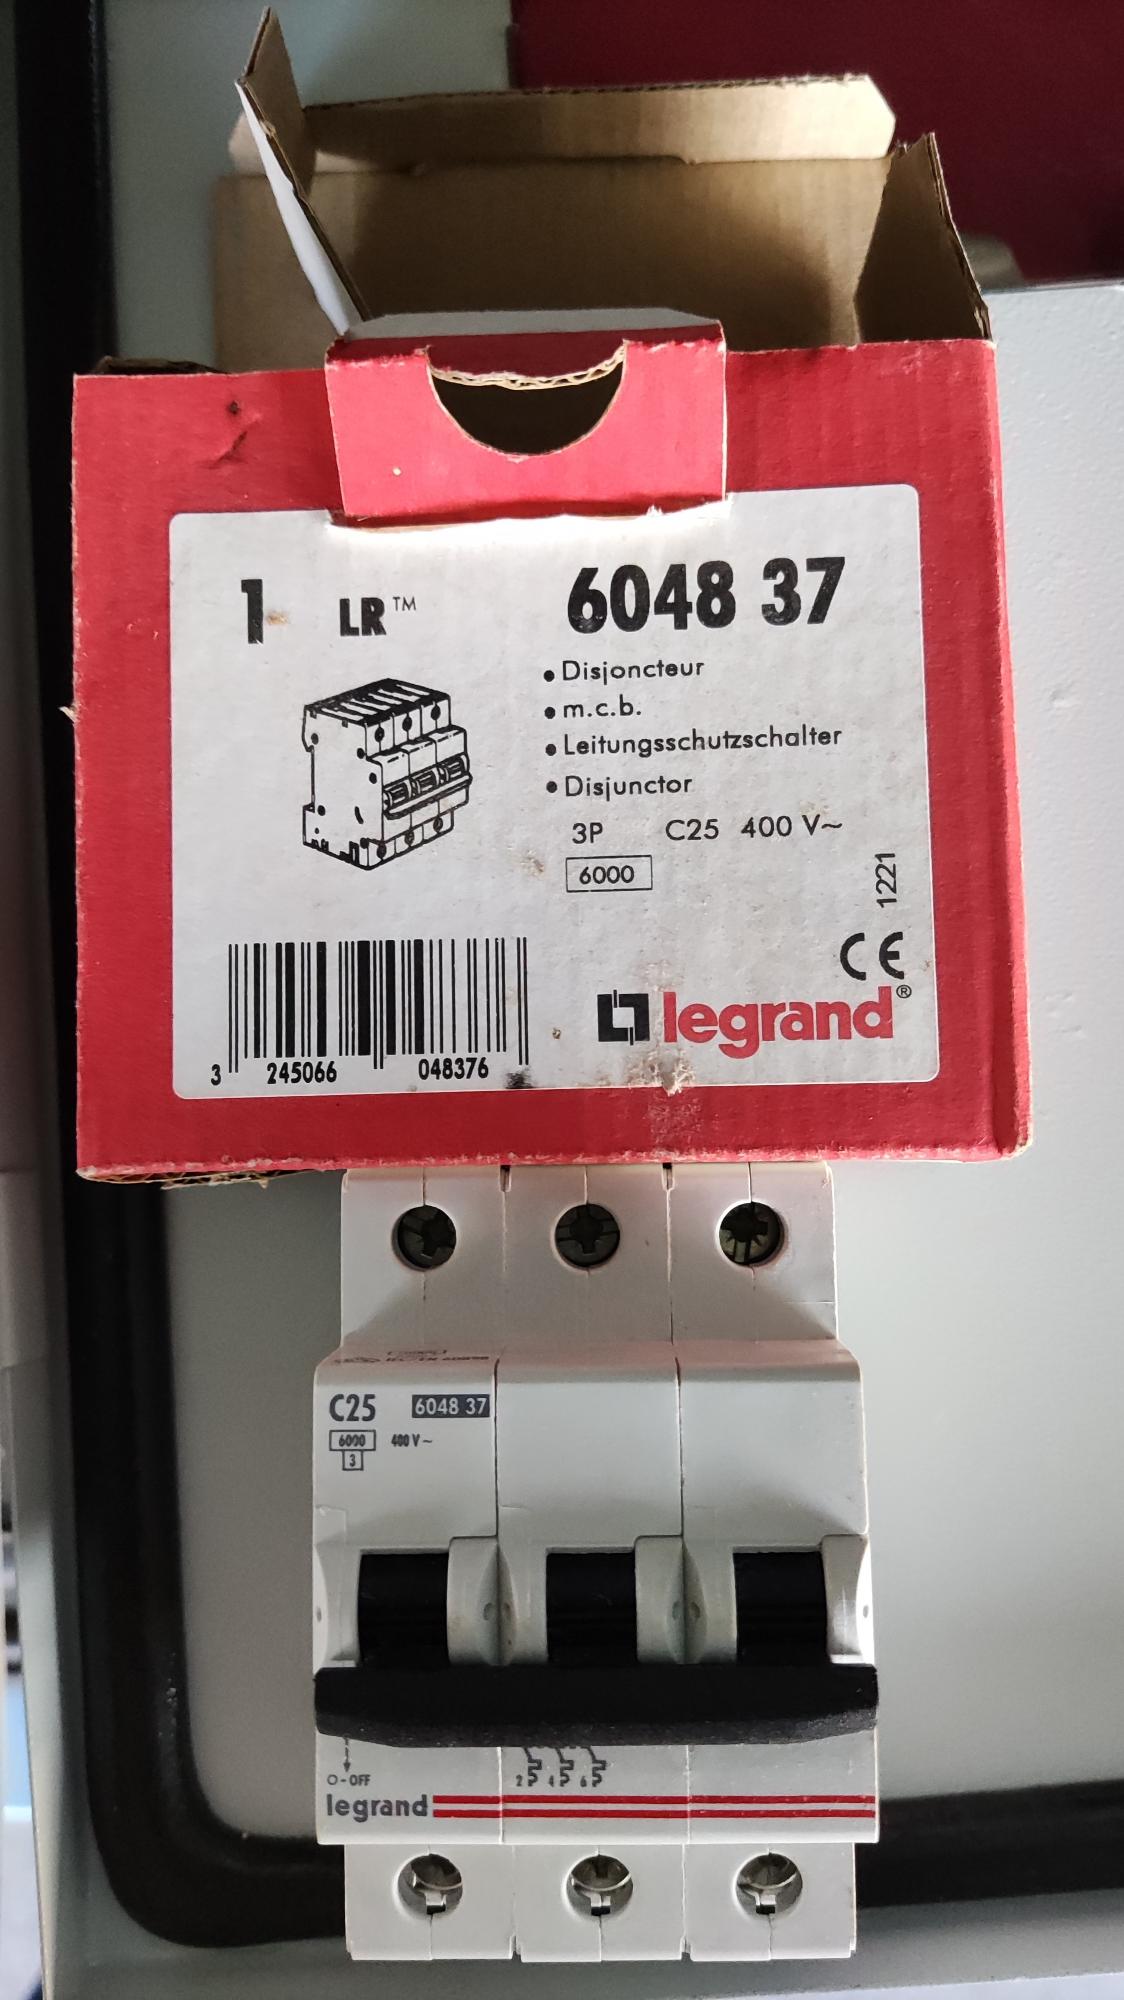 Автоматический выключатель legrand lr. Автоматический выключатель Legrand LR 1p 16a. Автомат Legrand LR 3/25 А. Автомат Legrand LR 2/50 А.